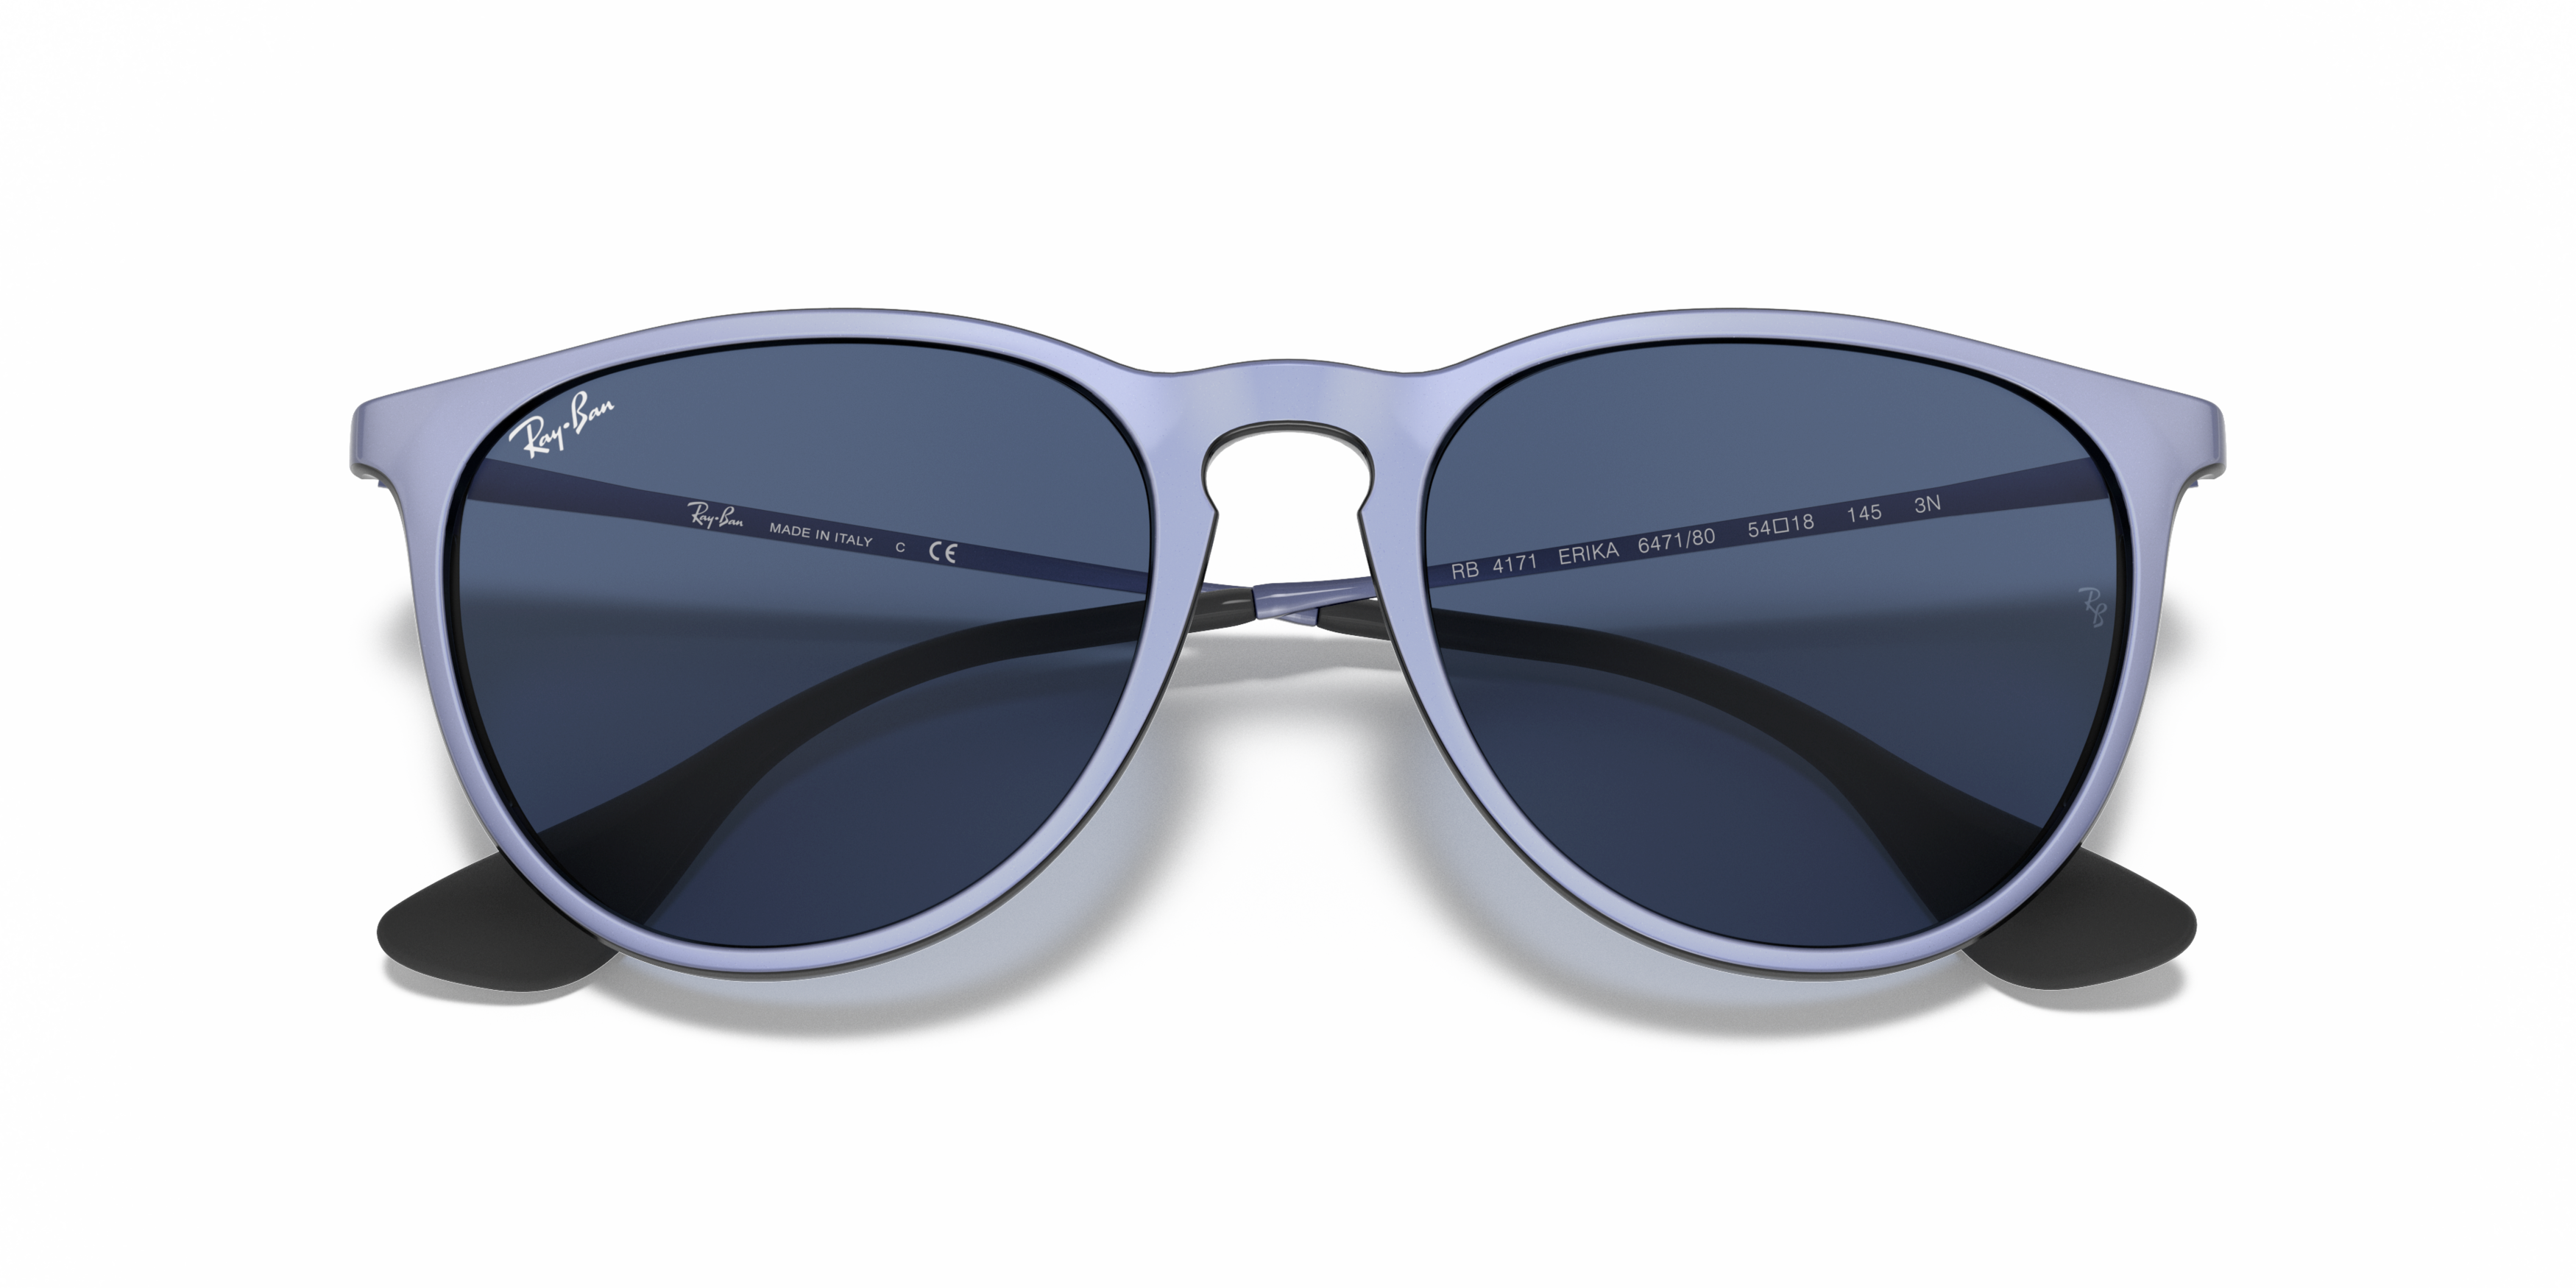 Folded Ray-Ban RB 4171 (647180) Sunglasses Blue / Transparent, Blue